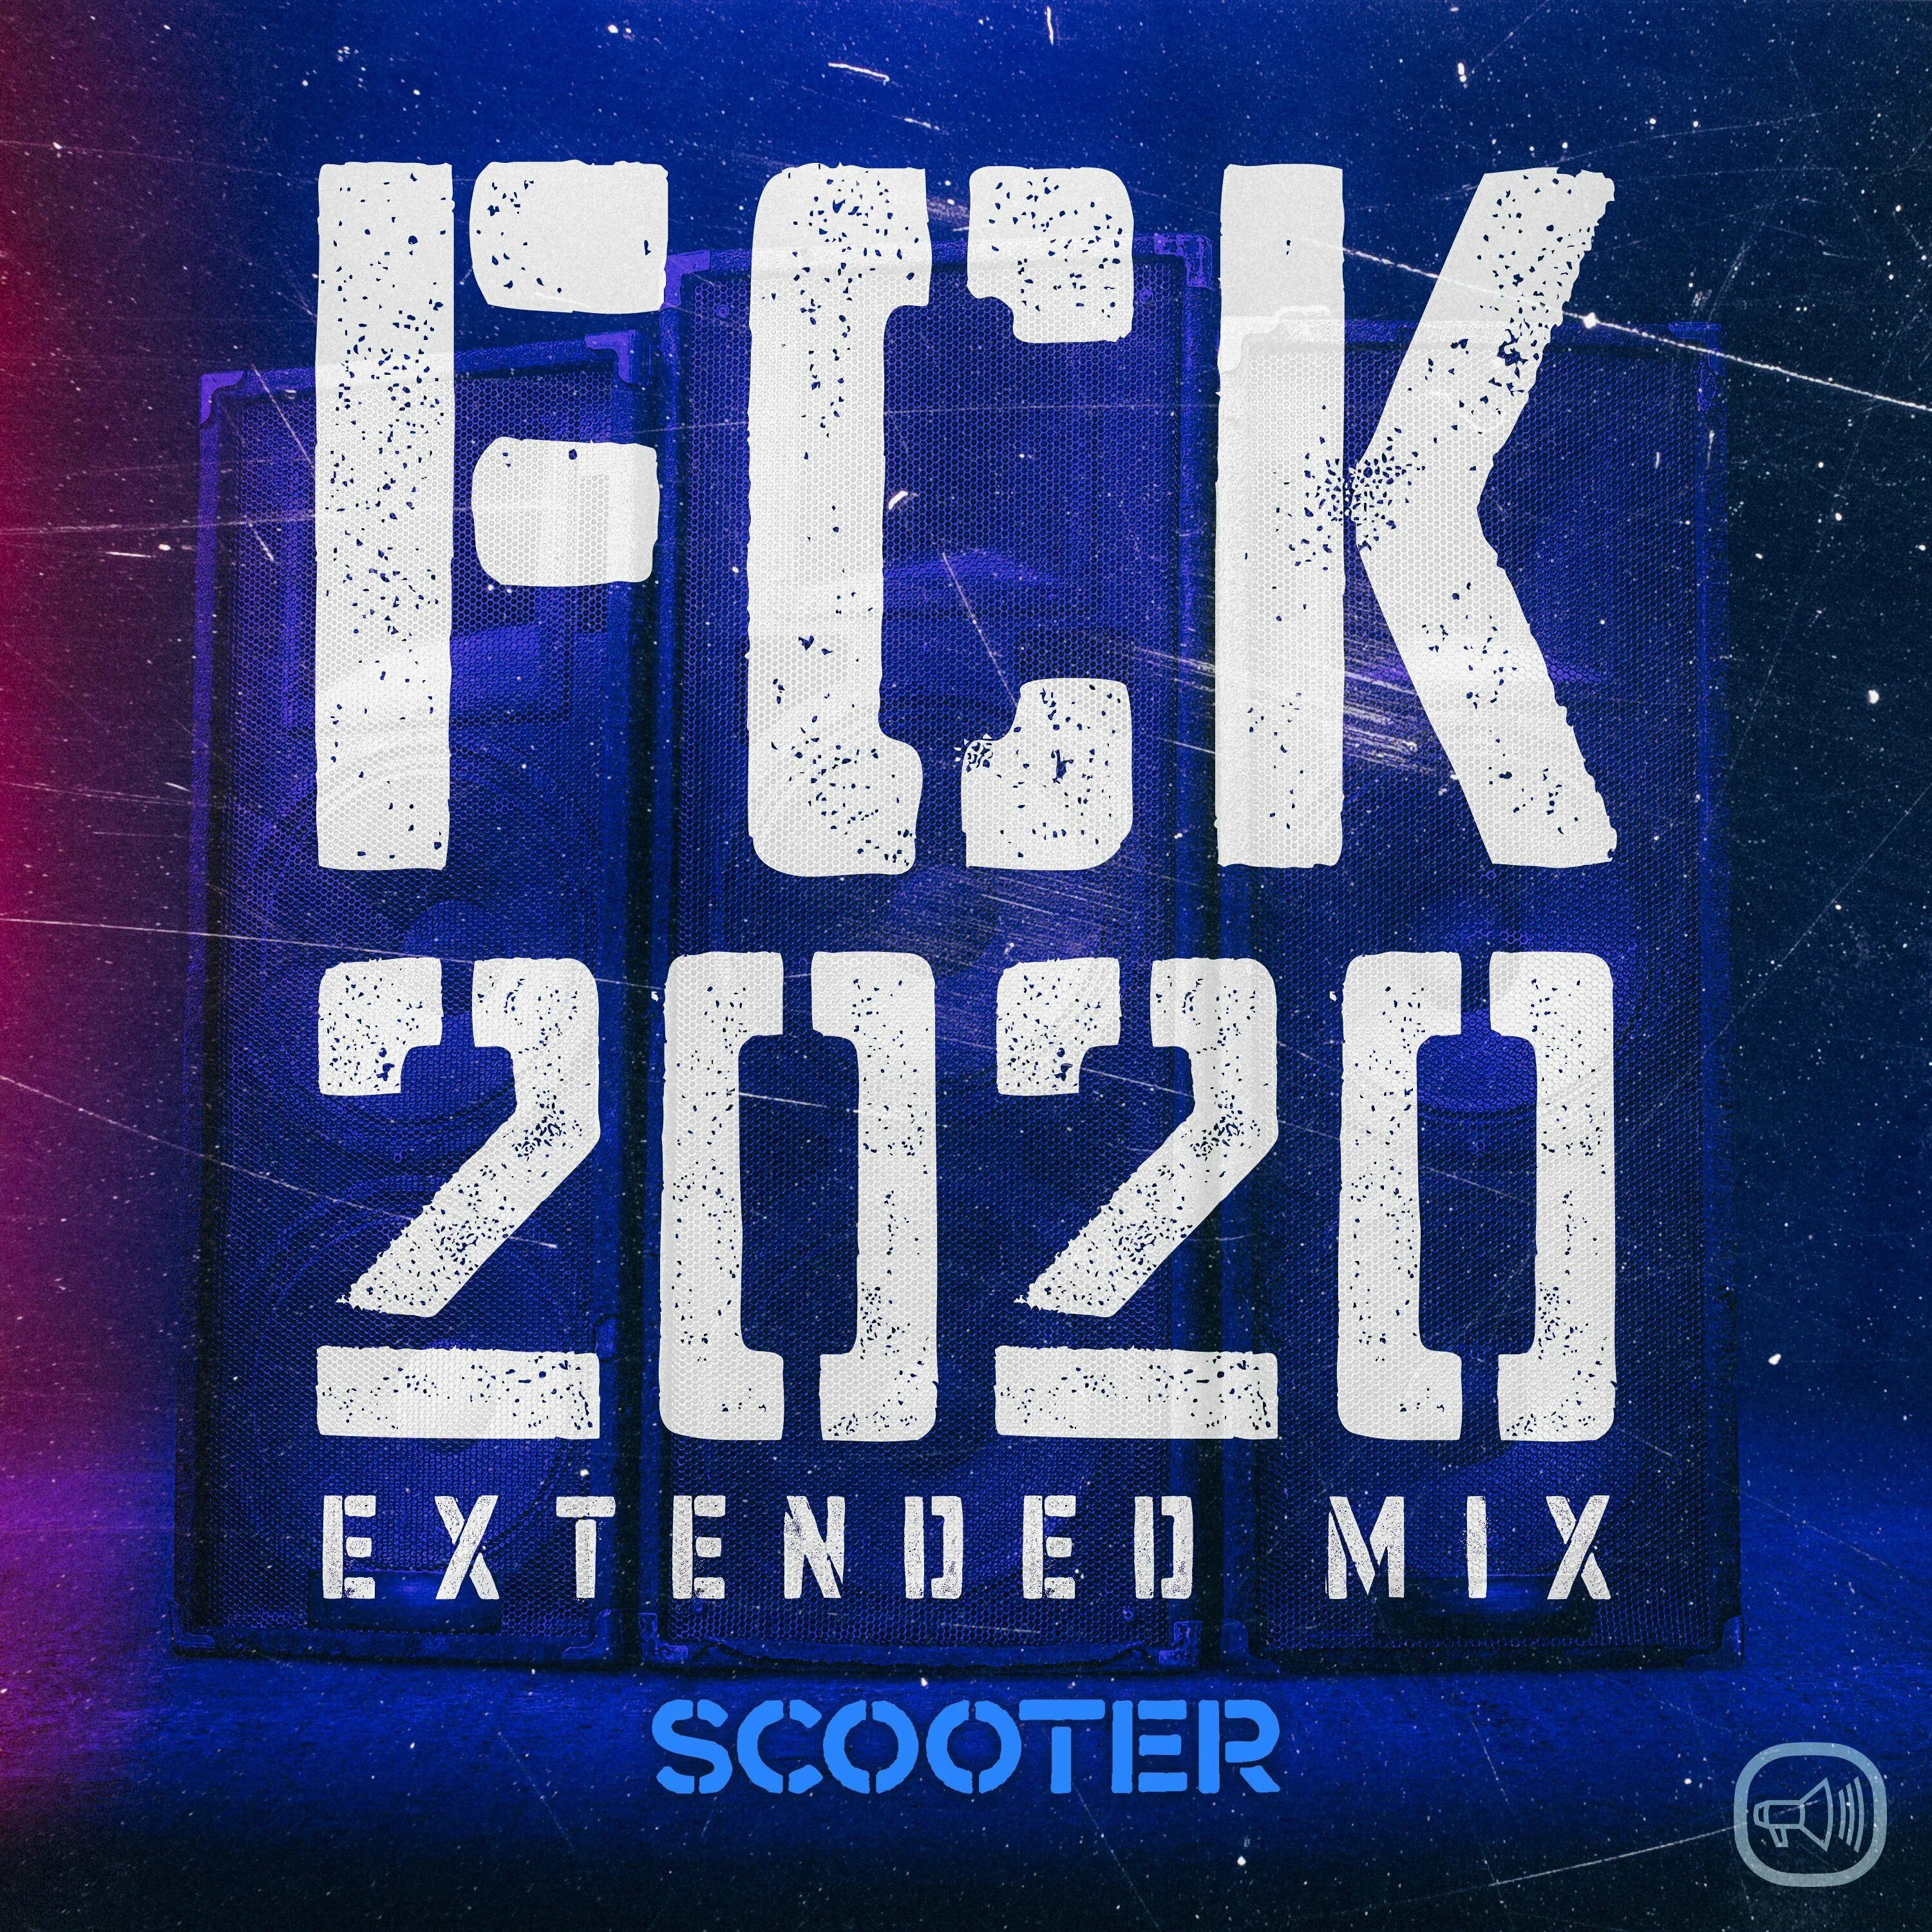 Scooter mix. Scooter fck2020 певица. Fck 2020. Скутер fck. Скутер альбомы.